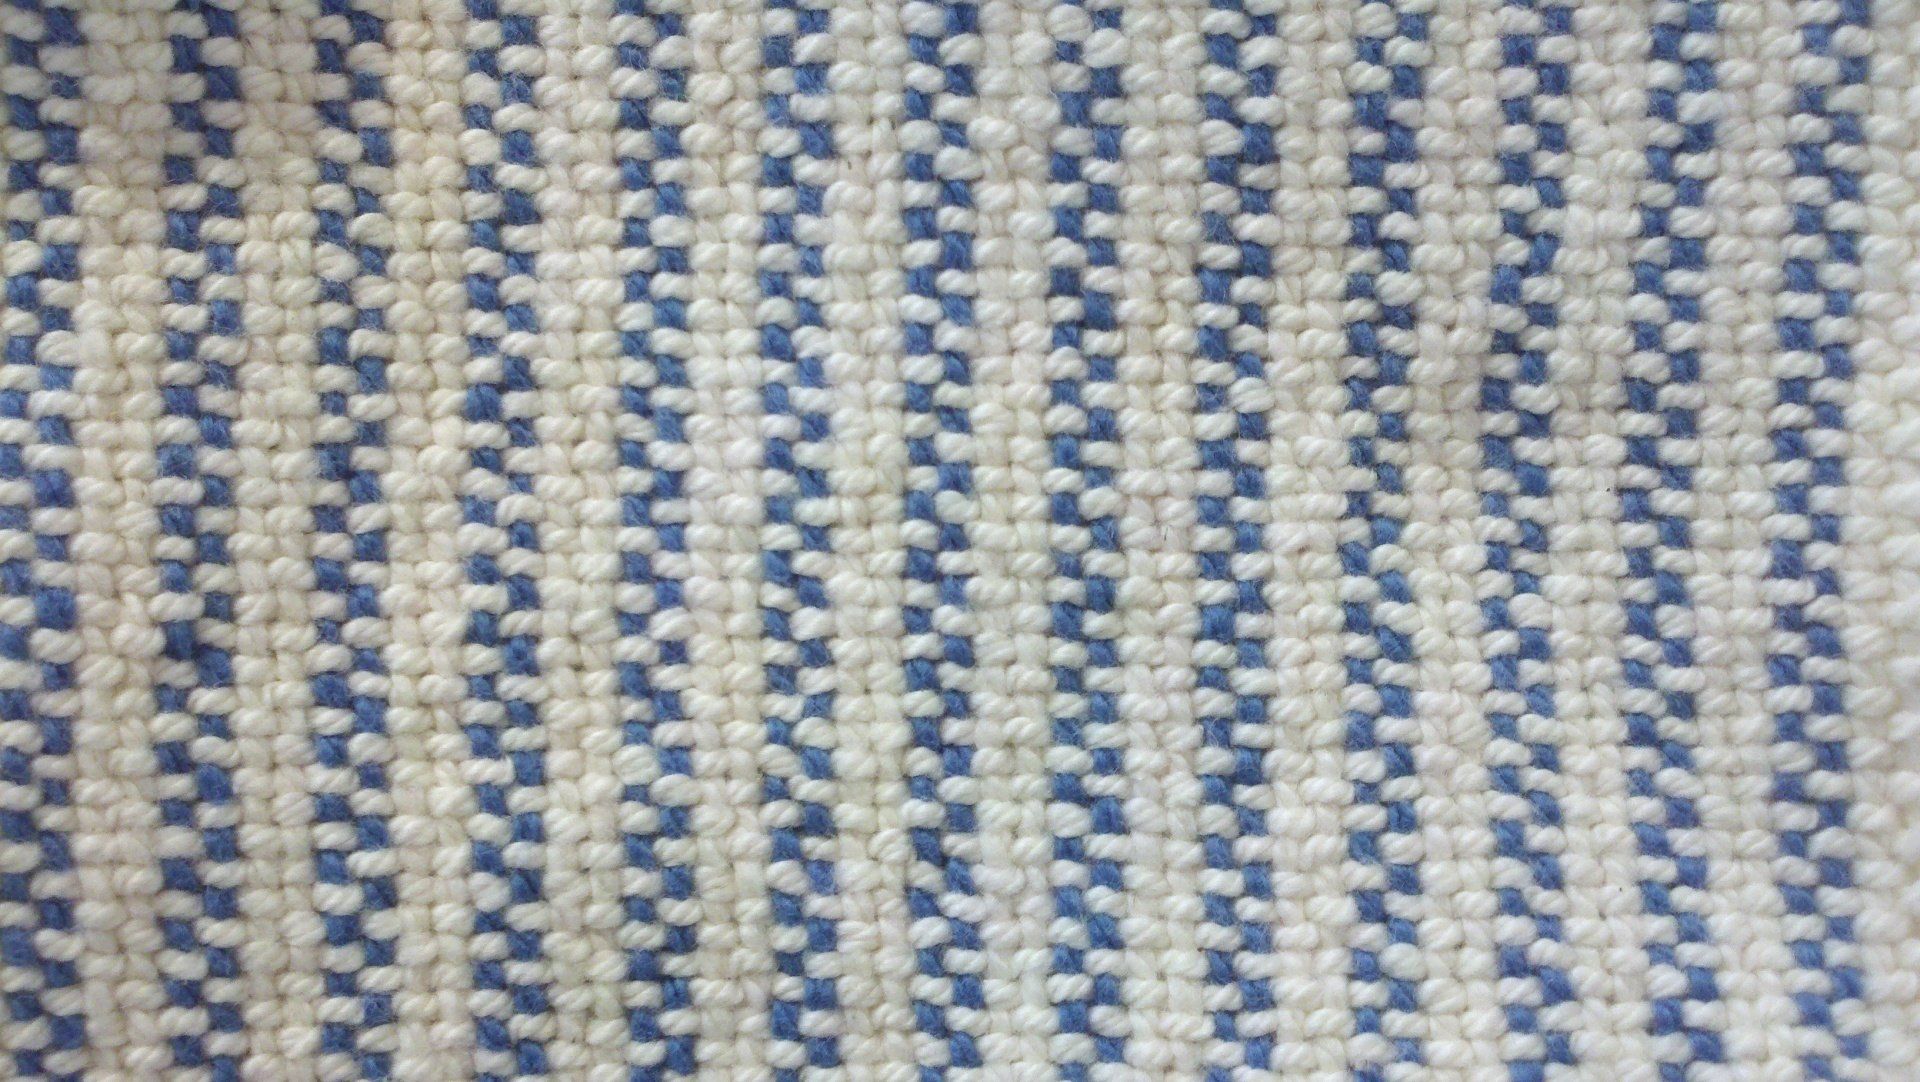 Blue and White Stripe Blanket, in New York, NY